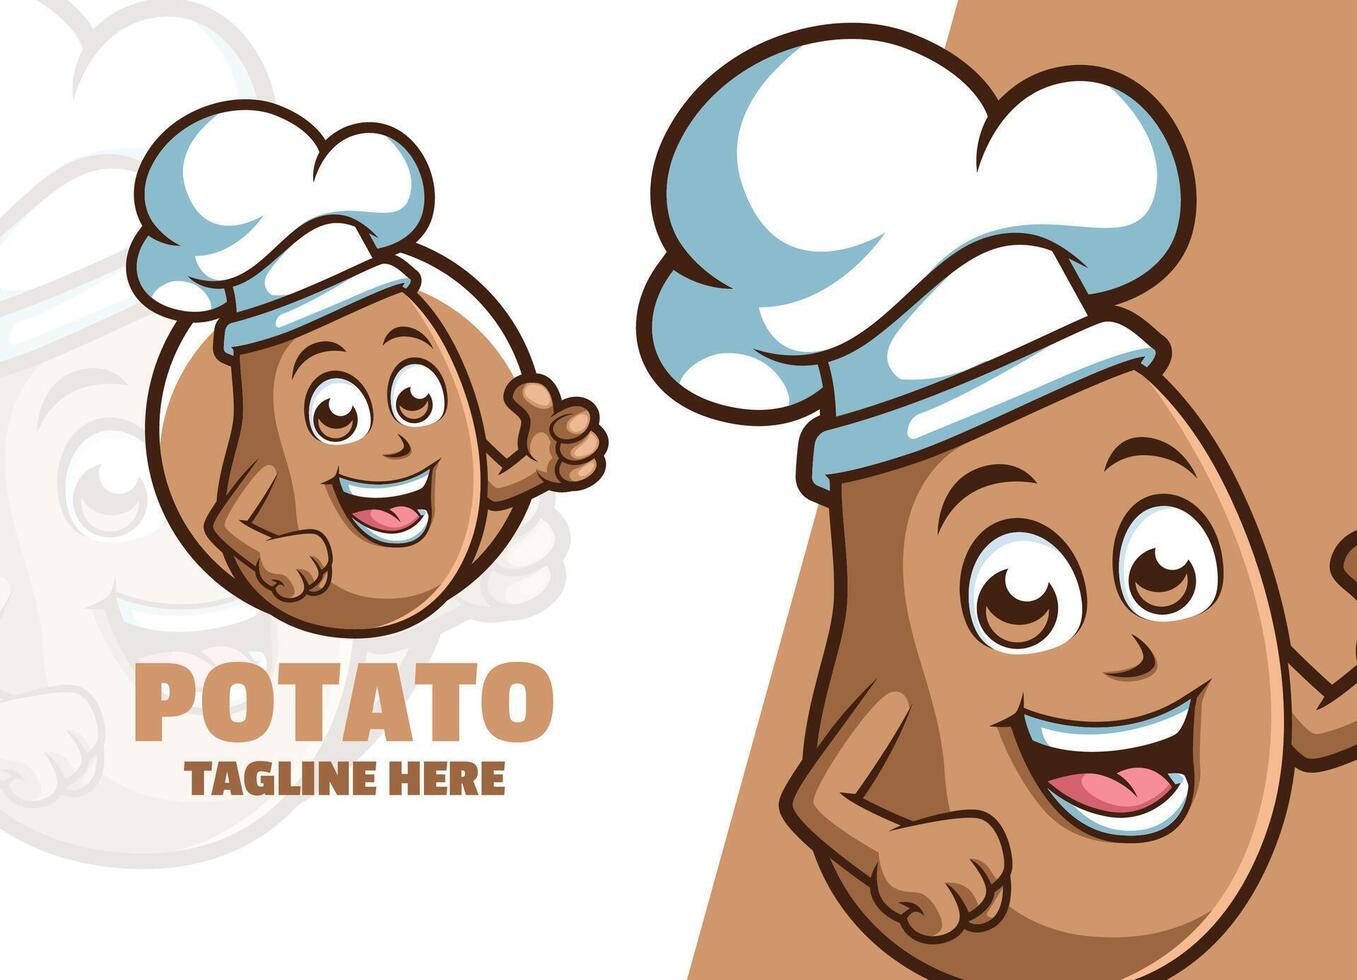 Cute Potato Cartoon character mascot logo Giving Thumb up vector illustration